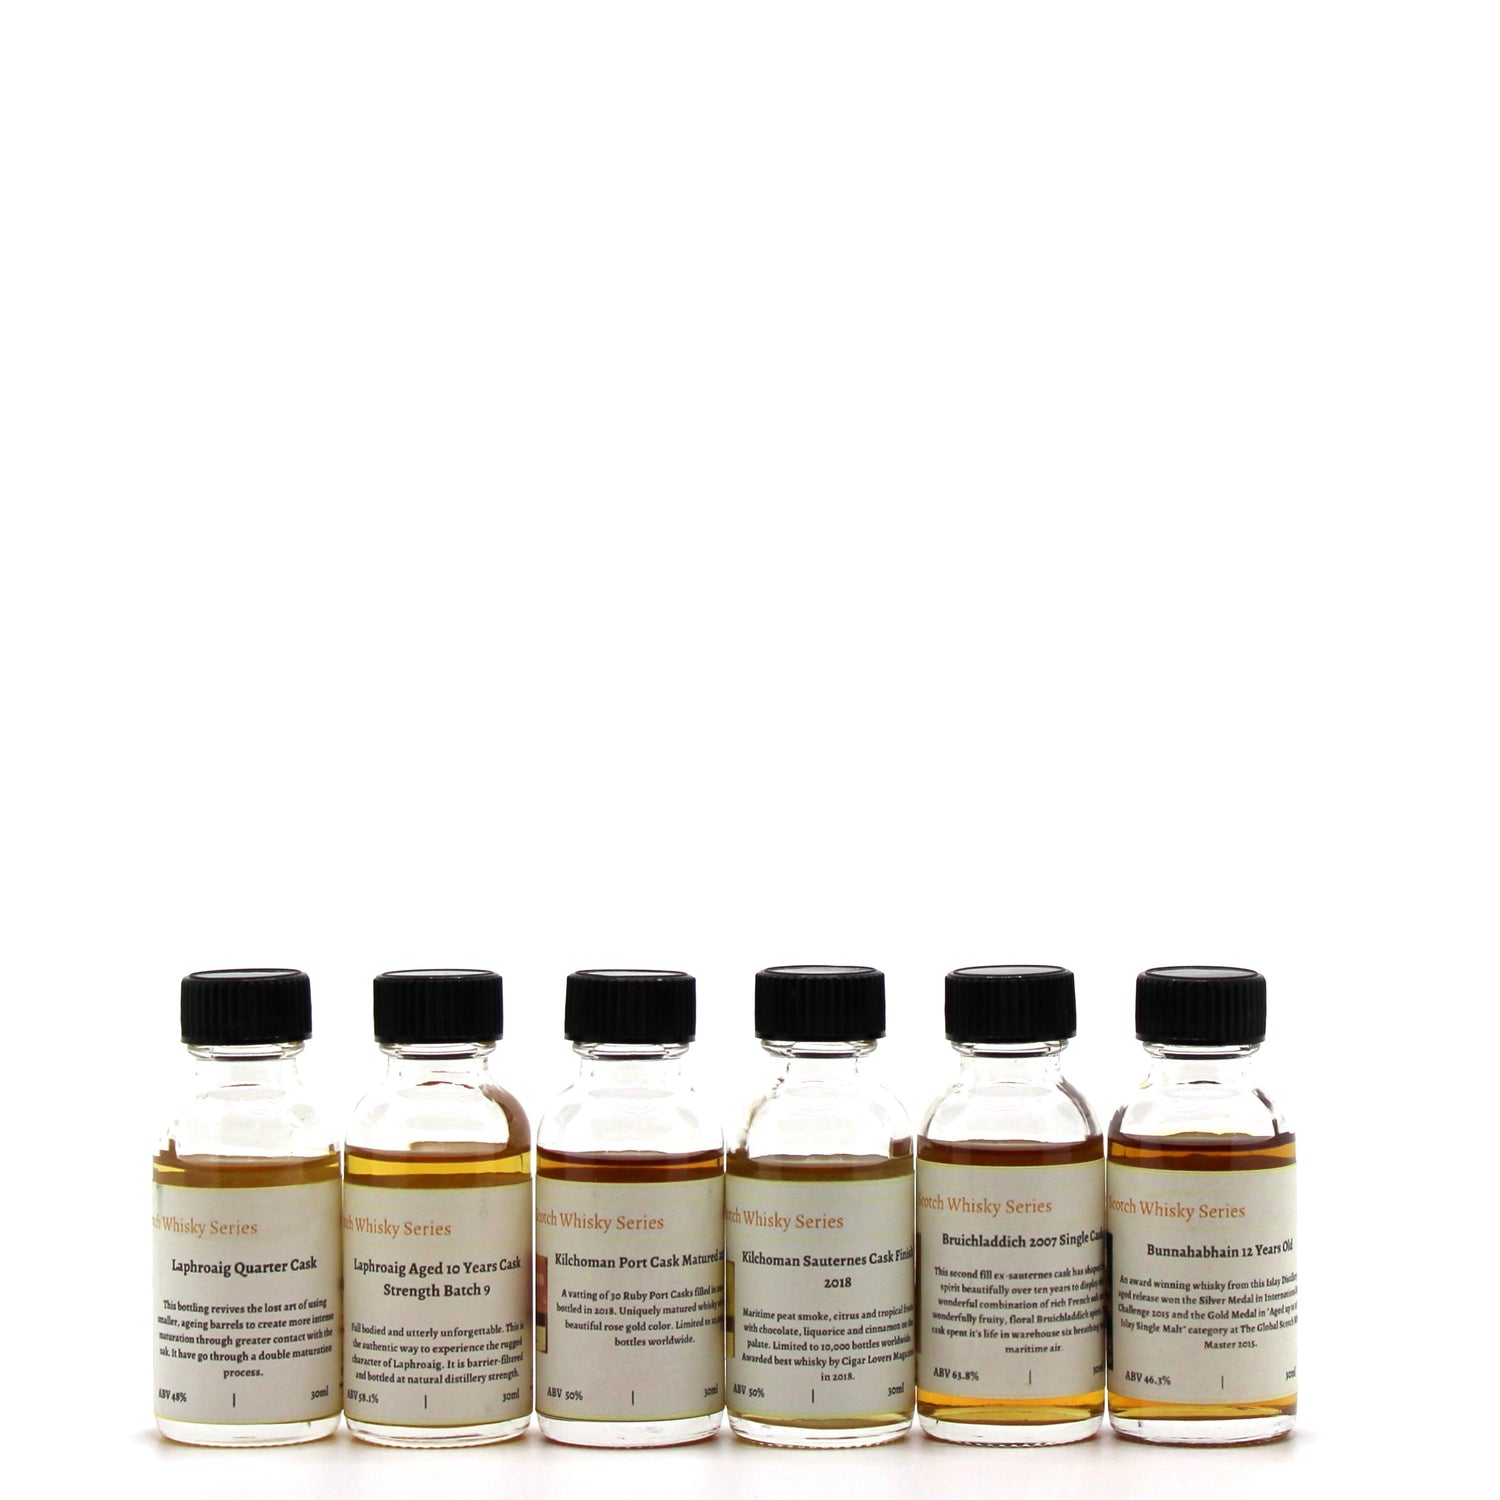 Mixed Islay Single Malt Scotch Whisky (6 x 30 ml) Tasting Set with Gift Box